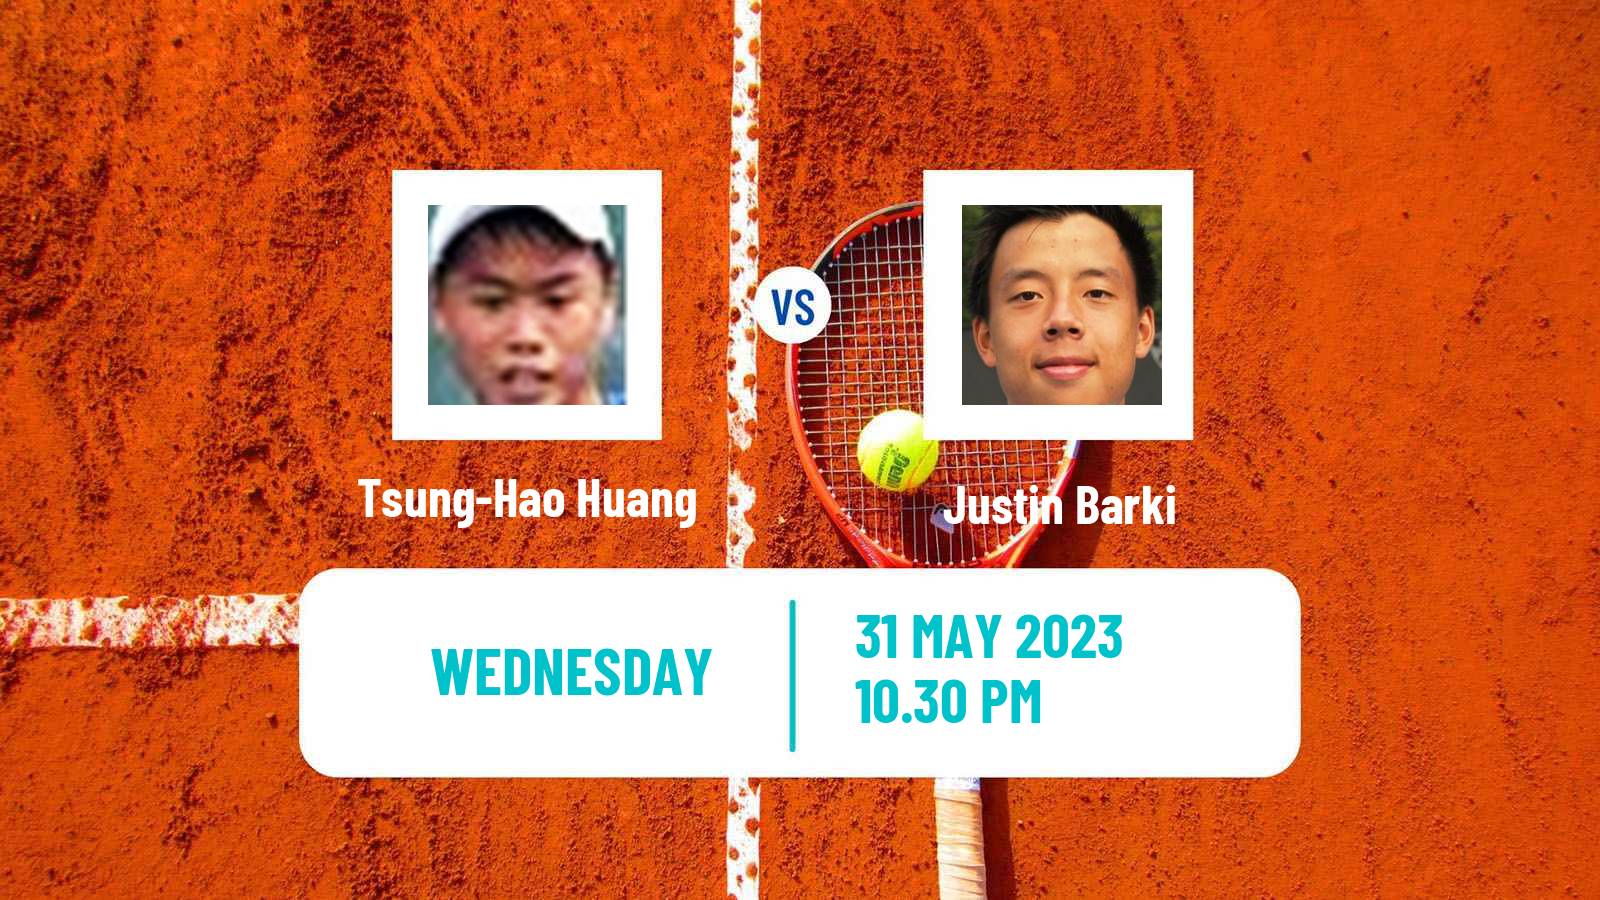 Tennis ITF M25 Jakarta 4 Men Tsung-Hao Huang - Justin Barki